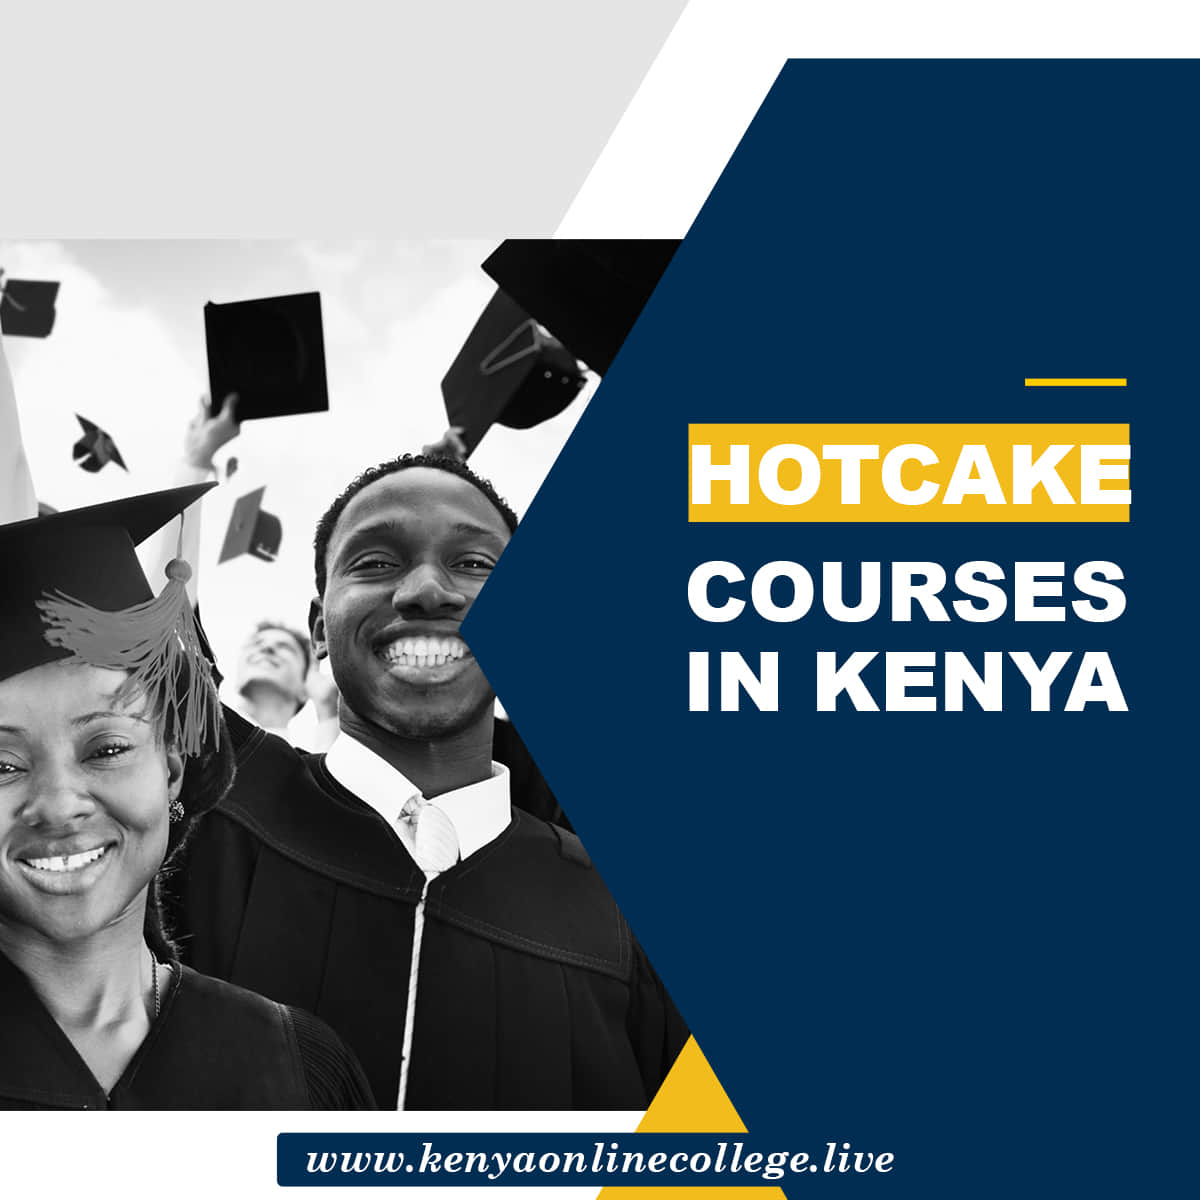 Hotcake courses in Kenya